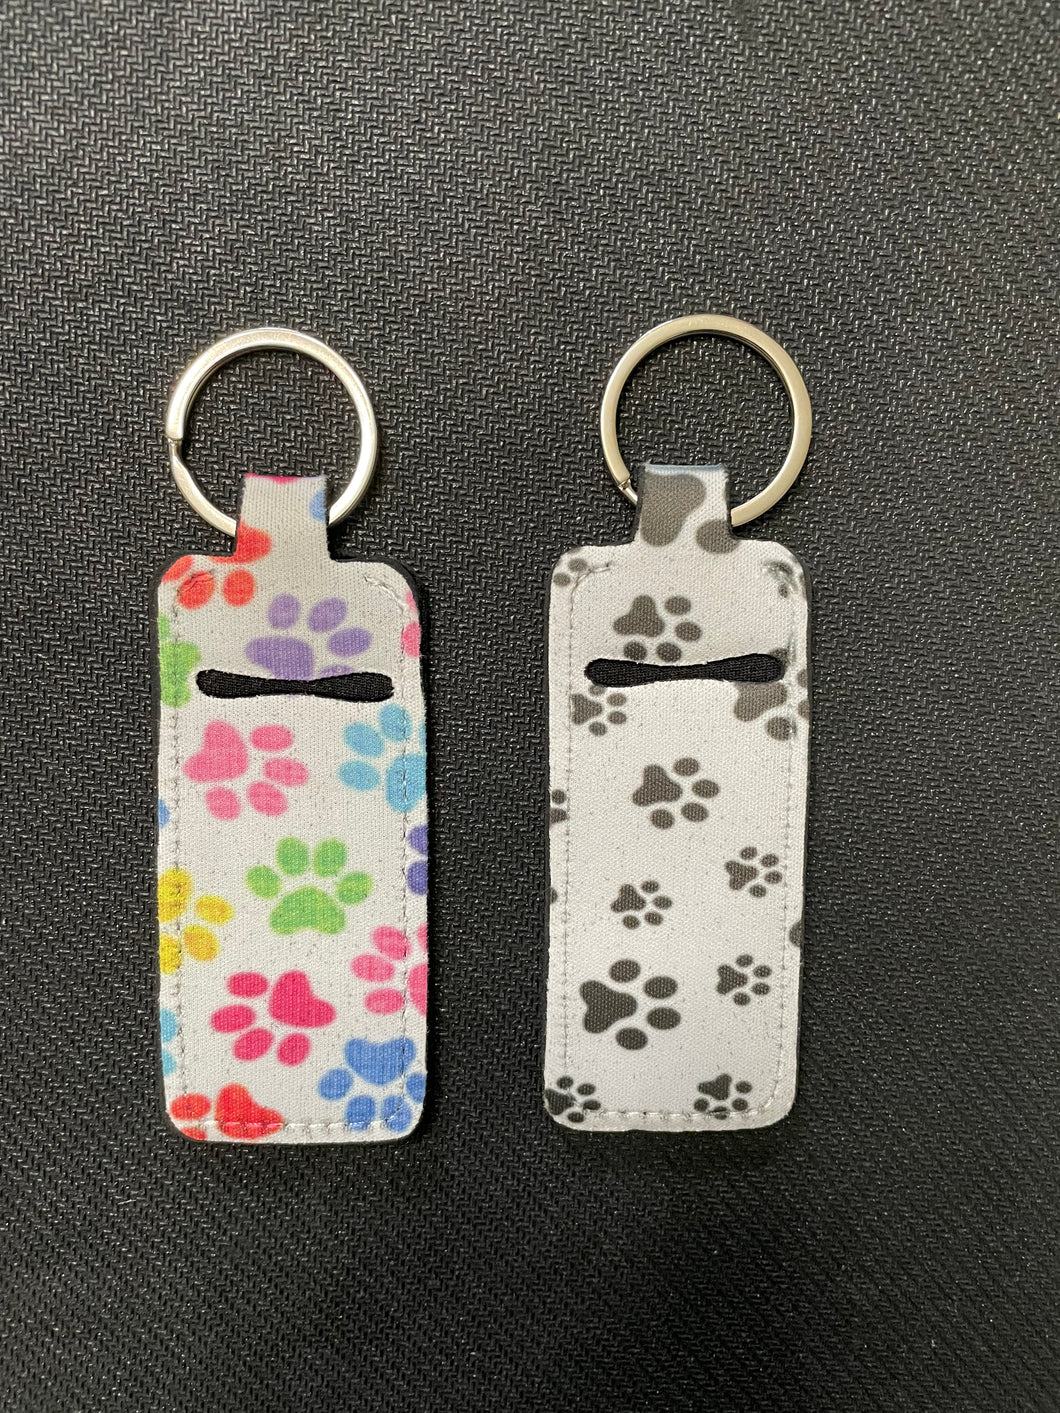 Paw Print Chapstick Keychain - Sassy Dogs Boutique 